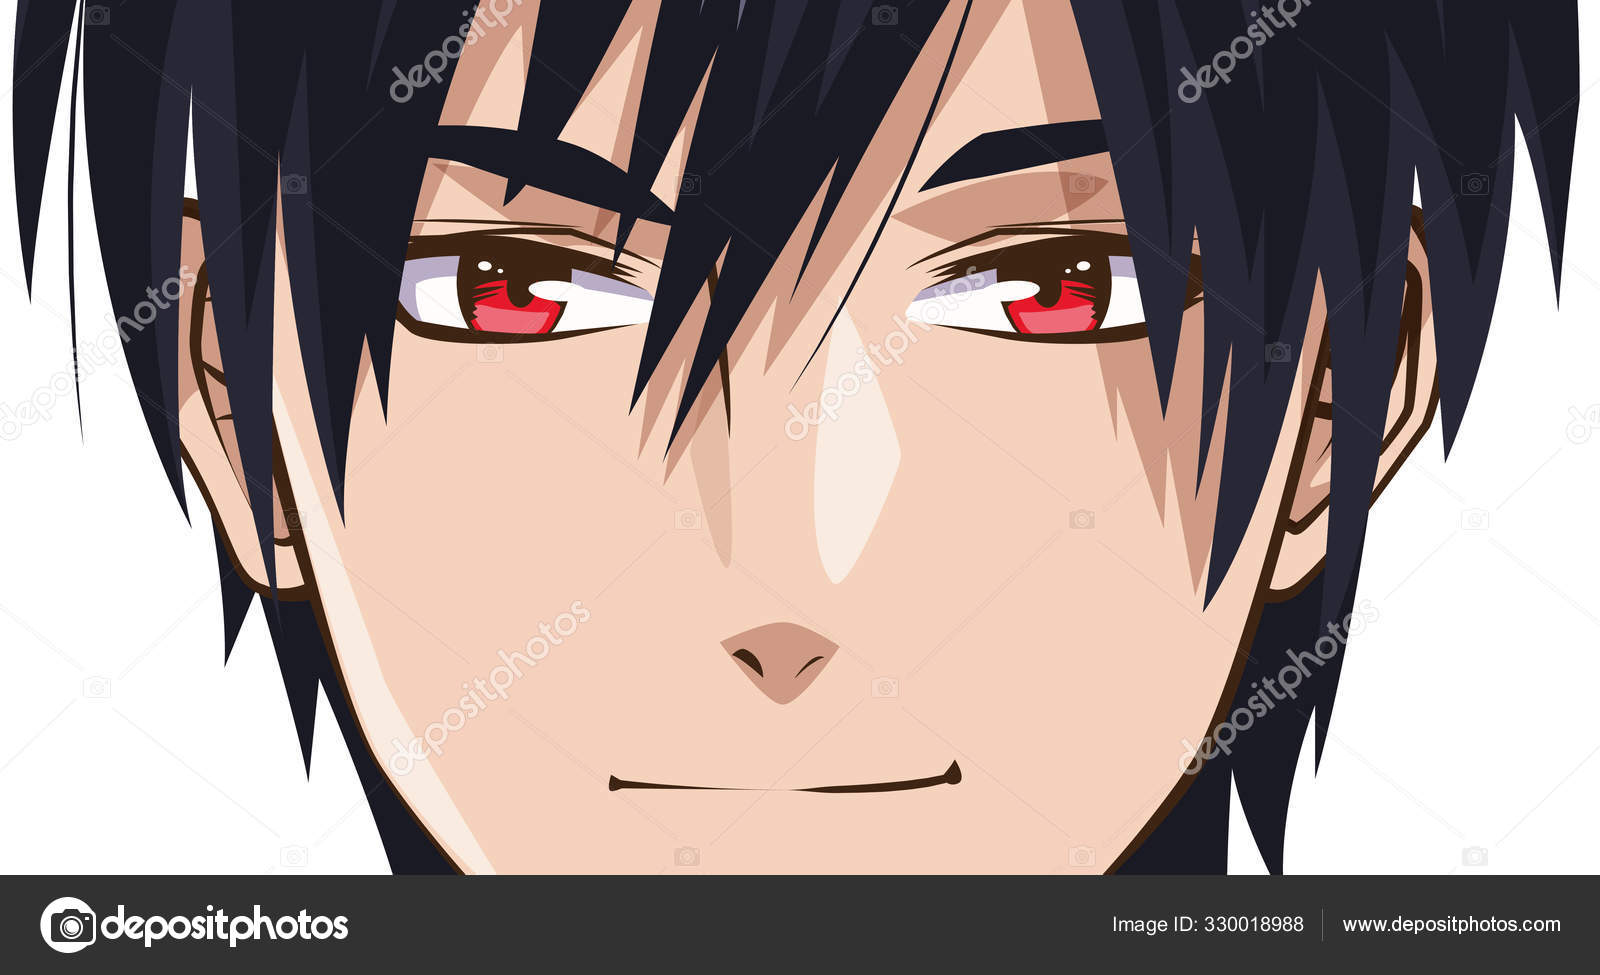 Boy anime male manga cartoon icon. Vector graphic, Stock vector